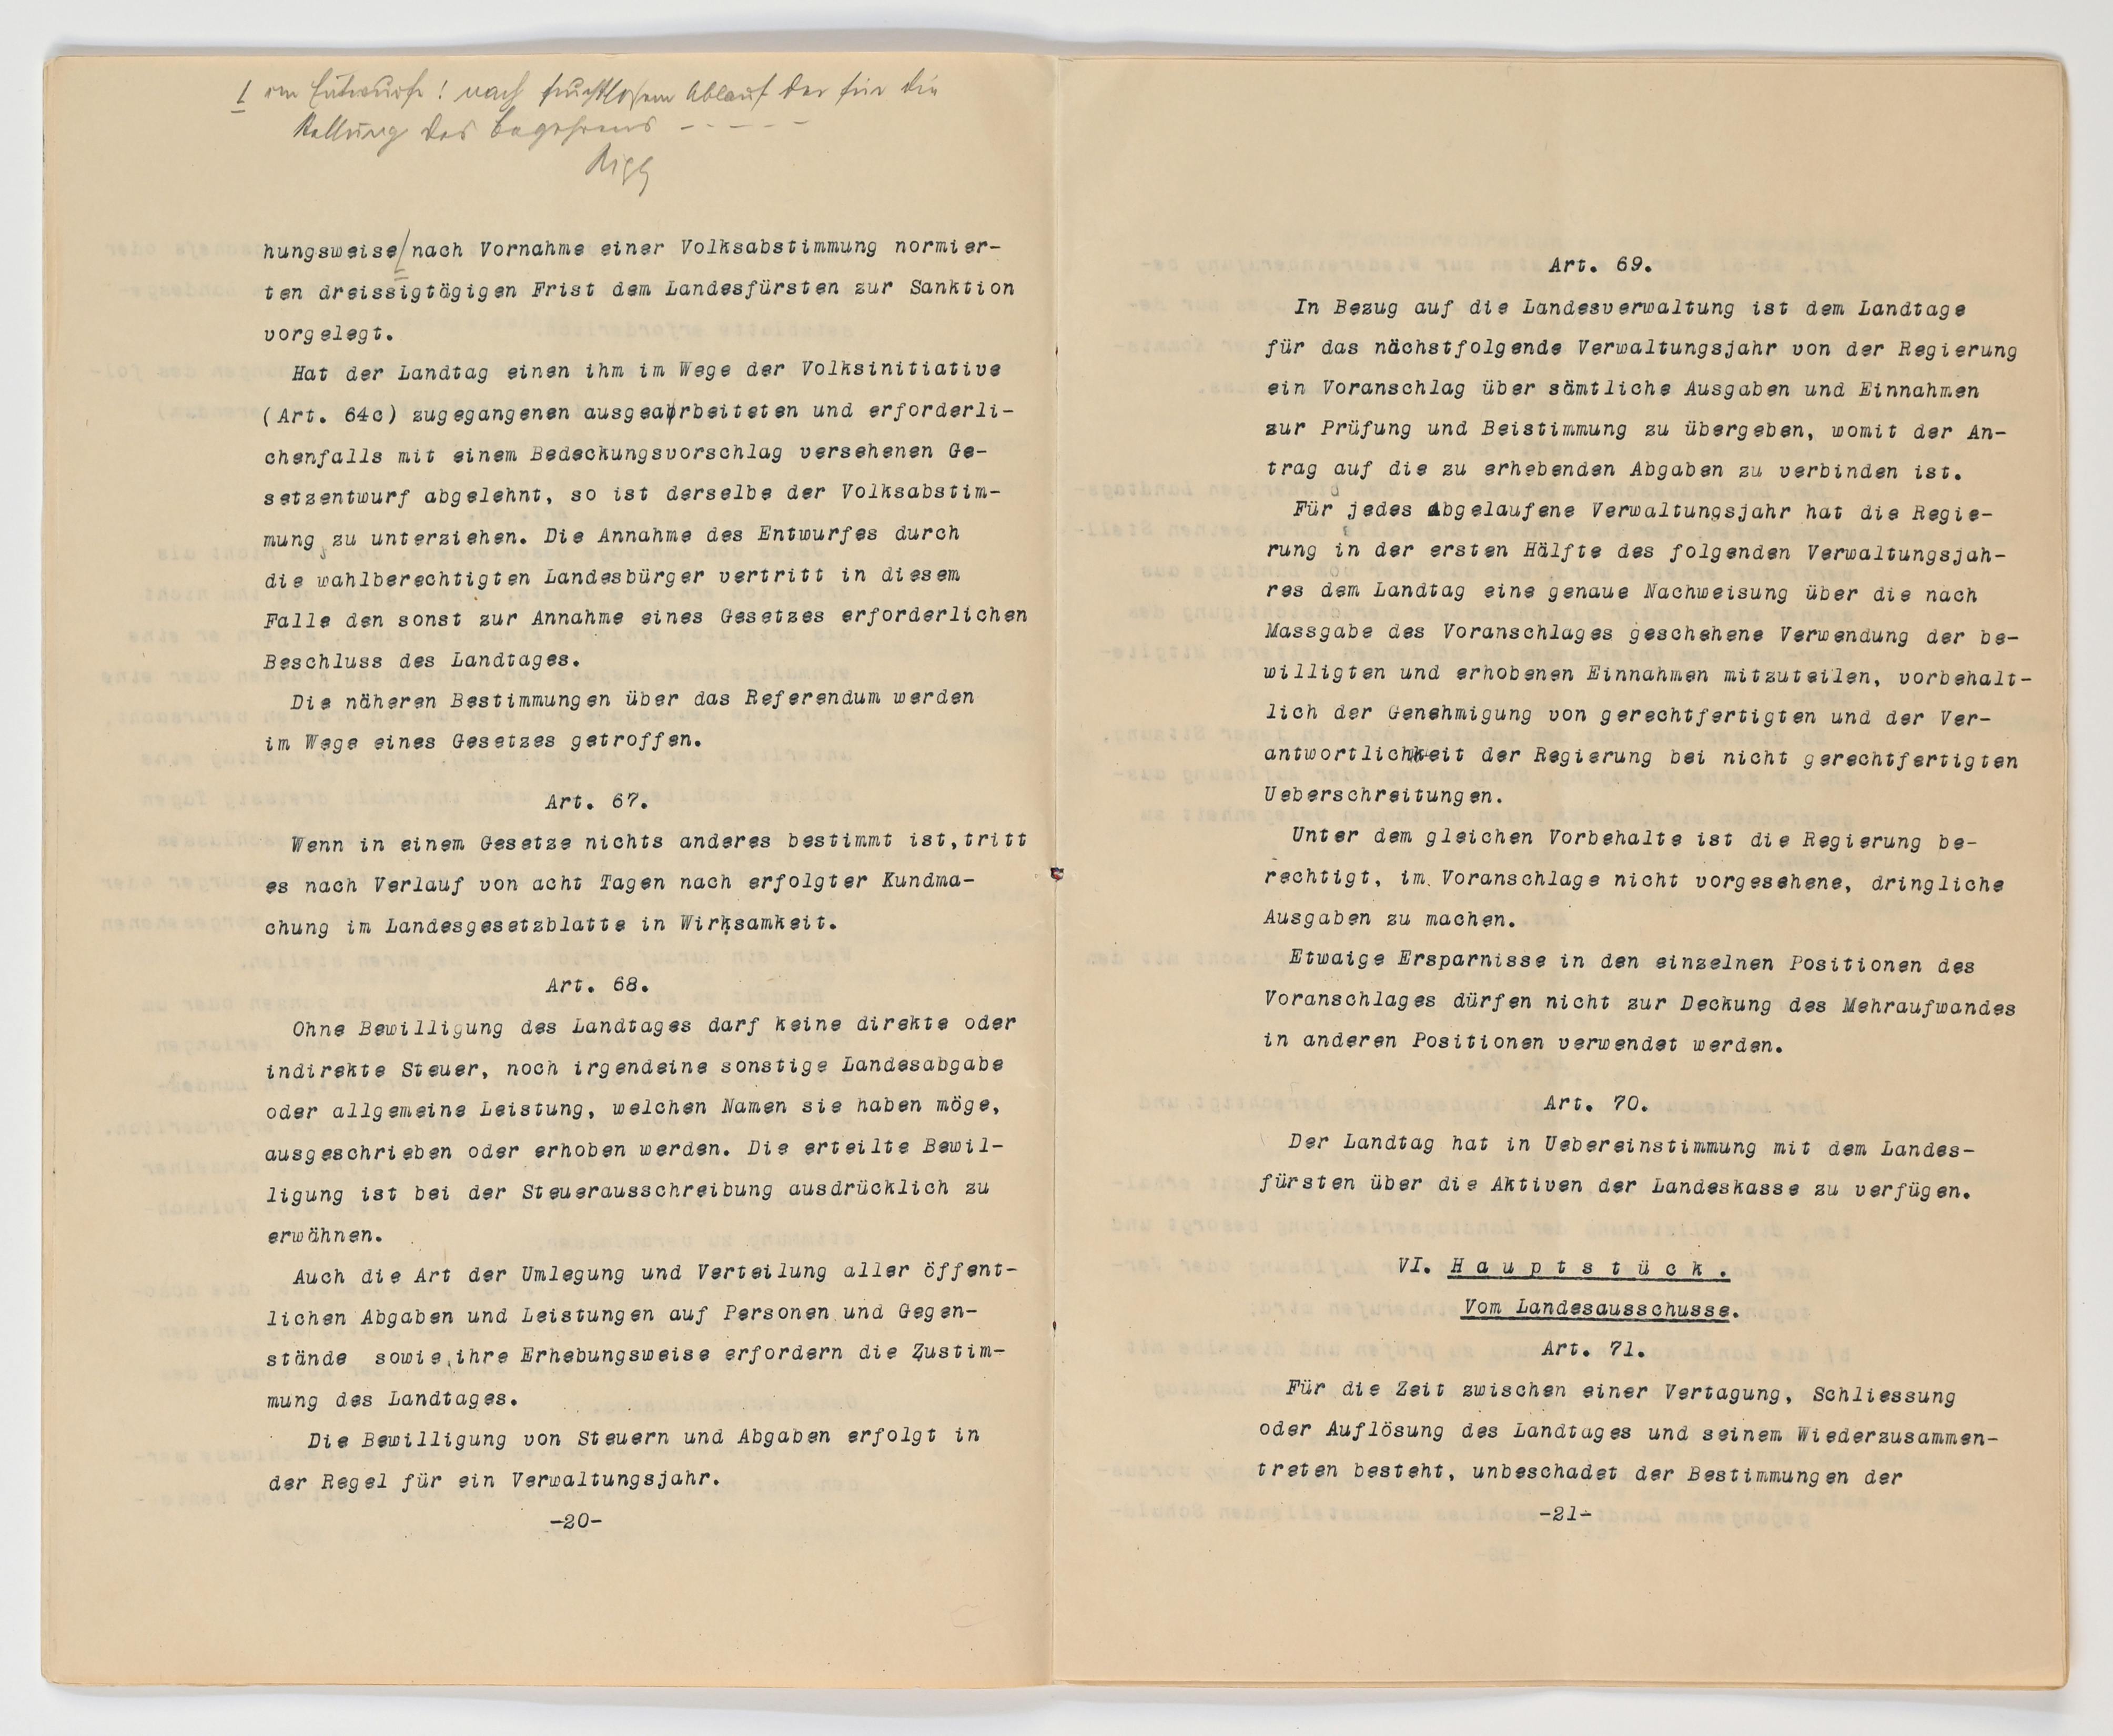 Verfassung 1921 Art. 67 bis Art. 71